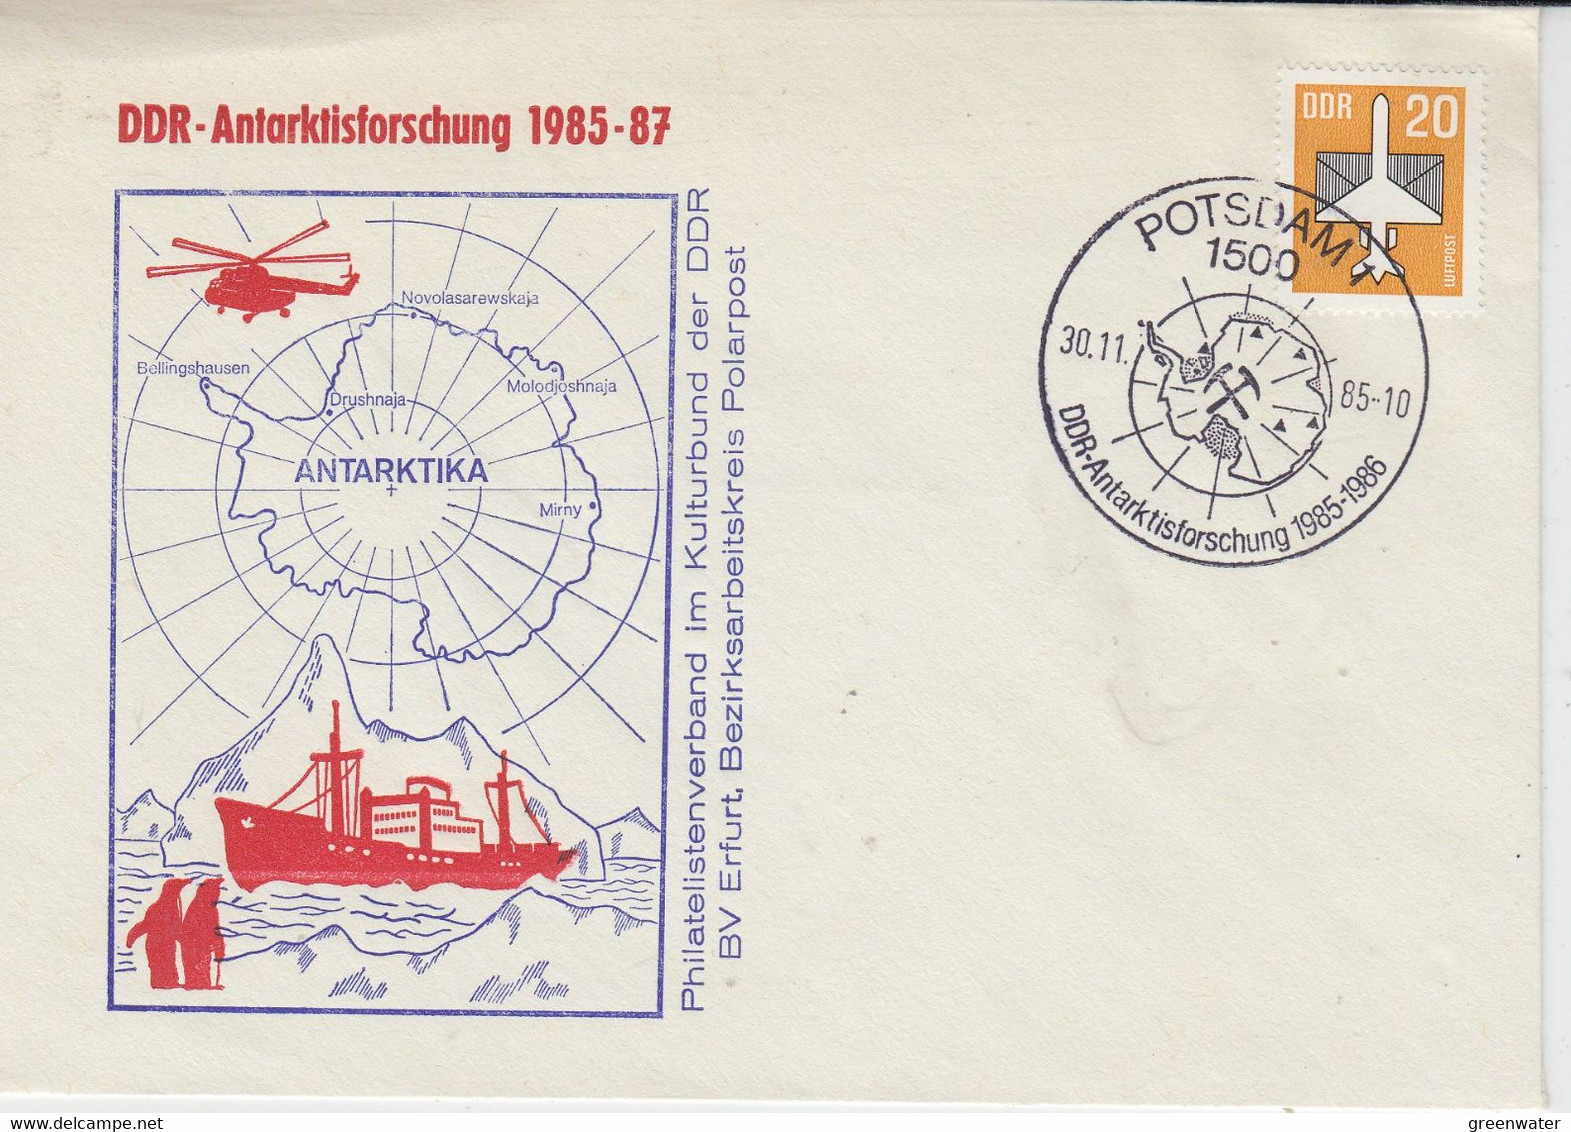 DDR 1985 Antarktisforschung DDRCa Potsdam 30-11-1985 (58020) - Onderzoeksprogramma's